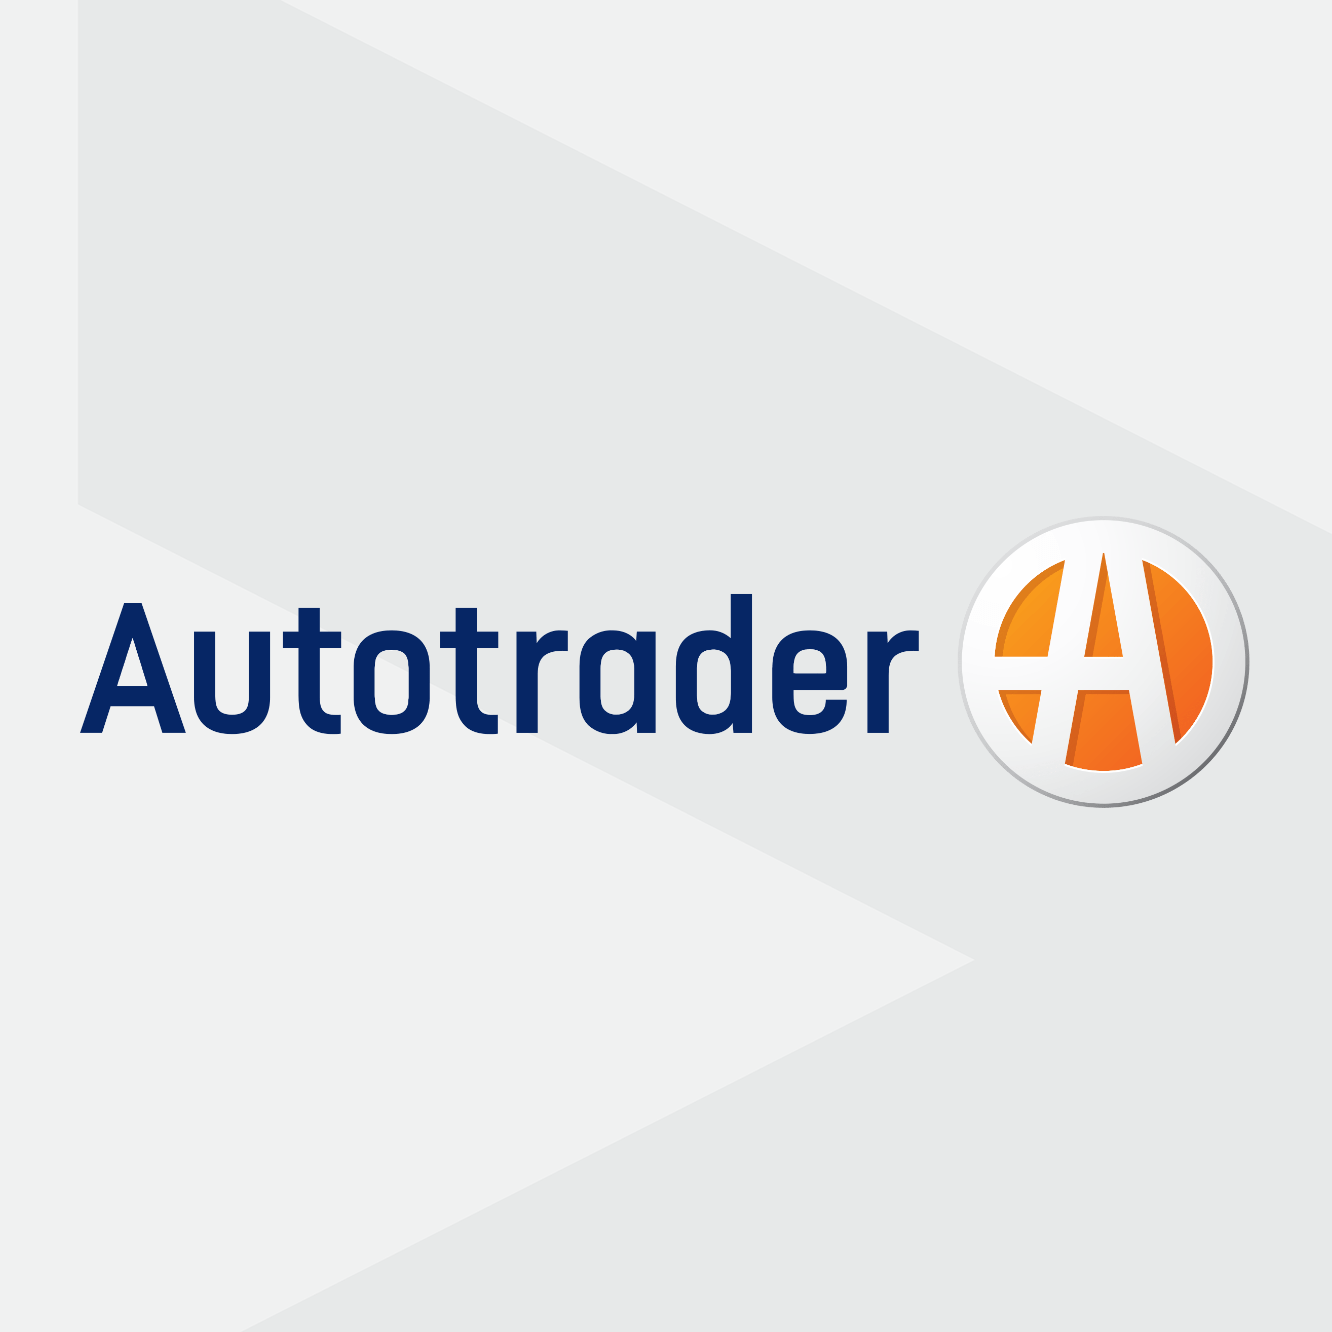 Autotrader case study